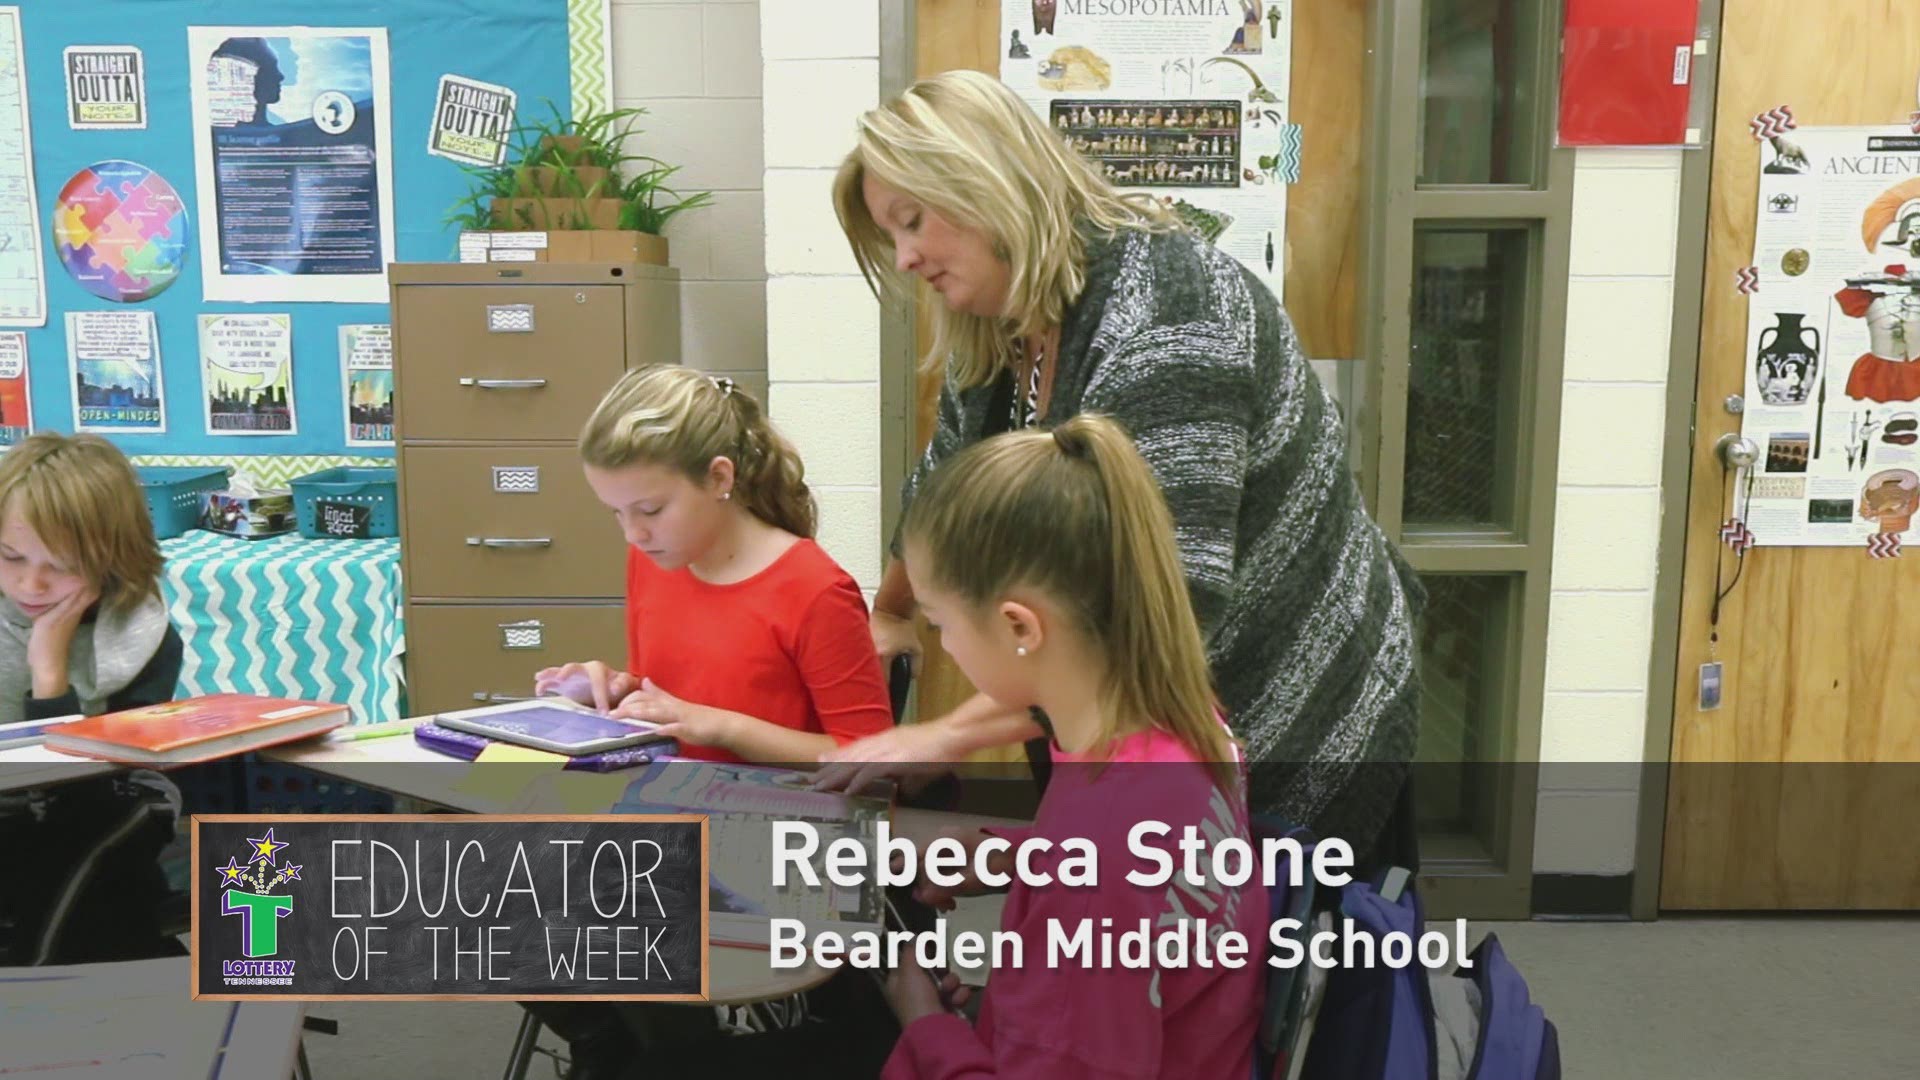 The Educator of the Week 11/21/2016 is Rebecca Stone.